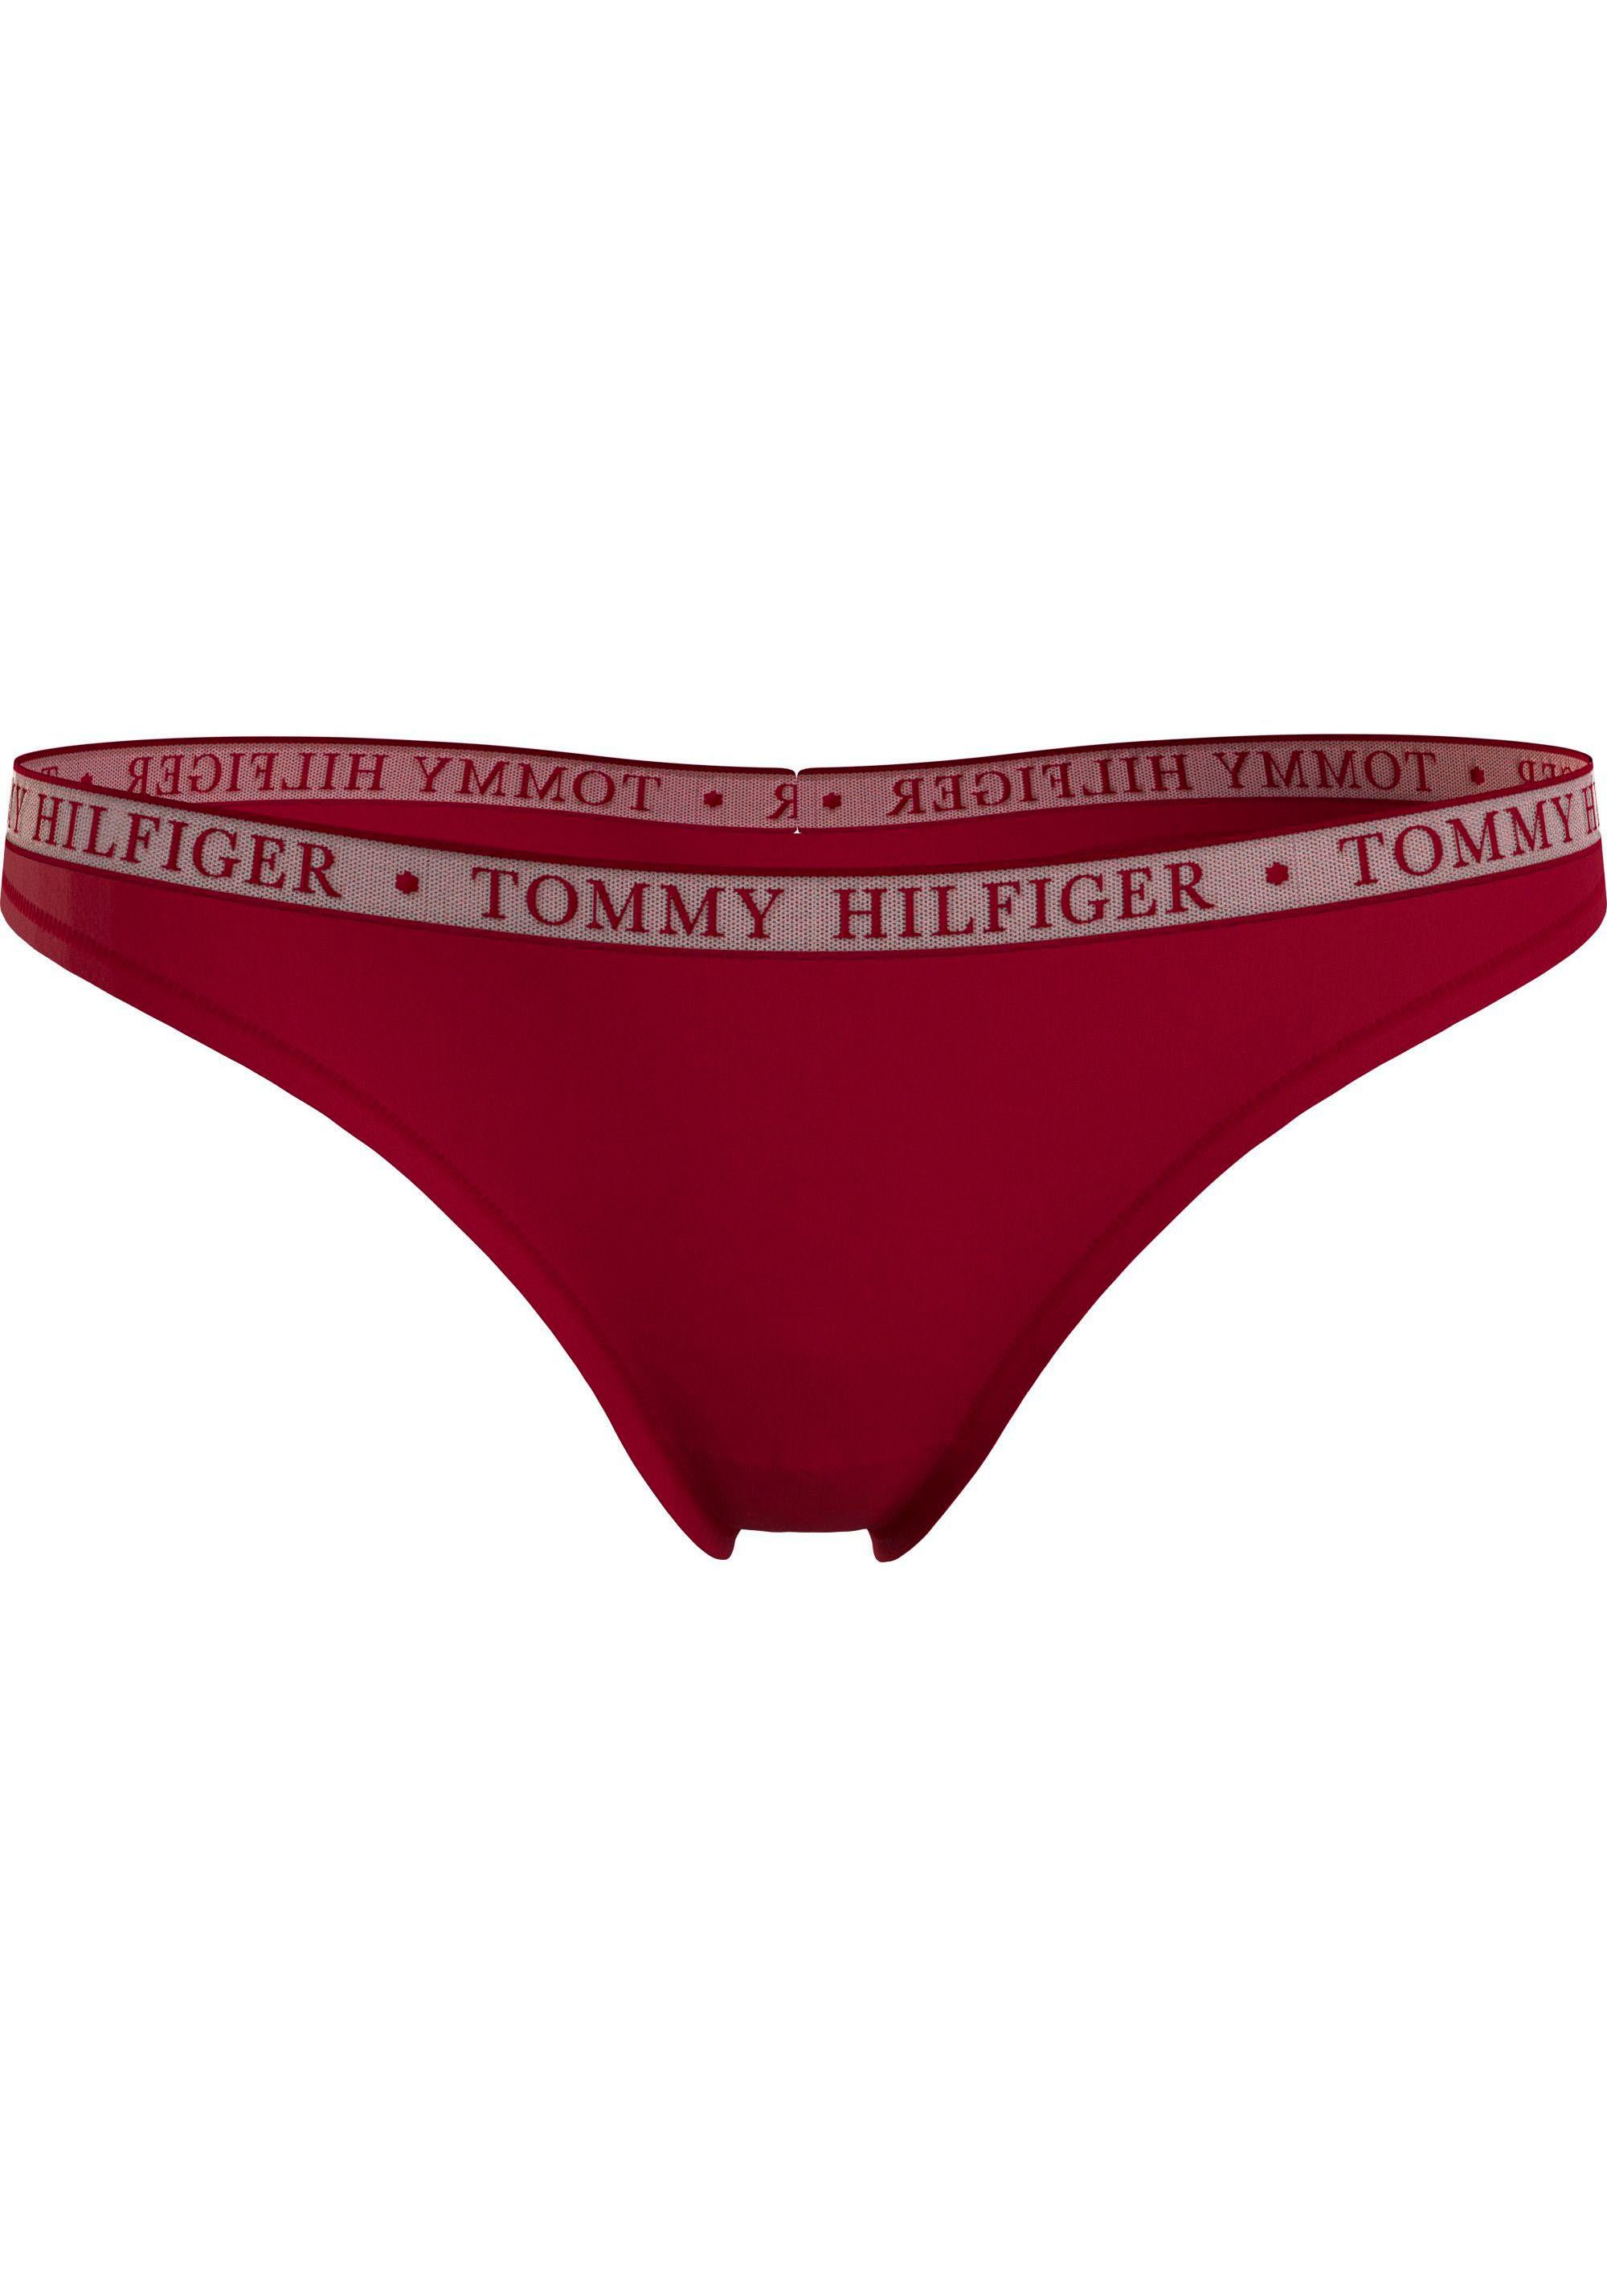 Logobund Des_Sky/White/Rouge mit 3P (Packung, Tommy Tommy 3er-Pack) SIZES) THONG Hilfiger (EXT LACE Hilfiger Underwear T-String